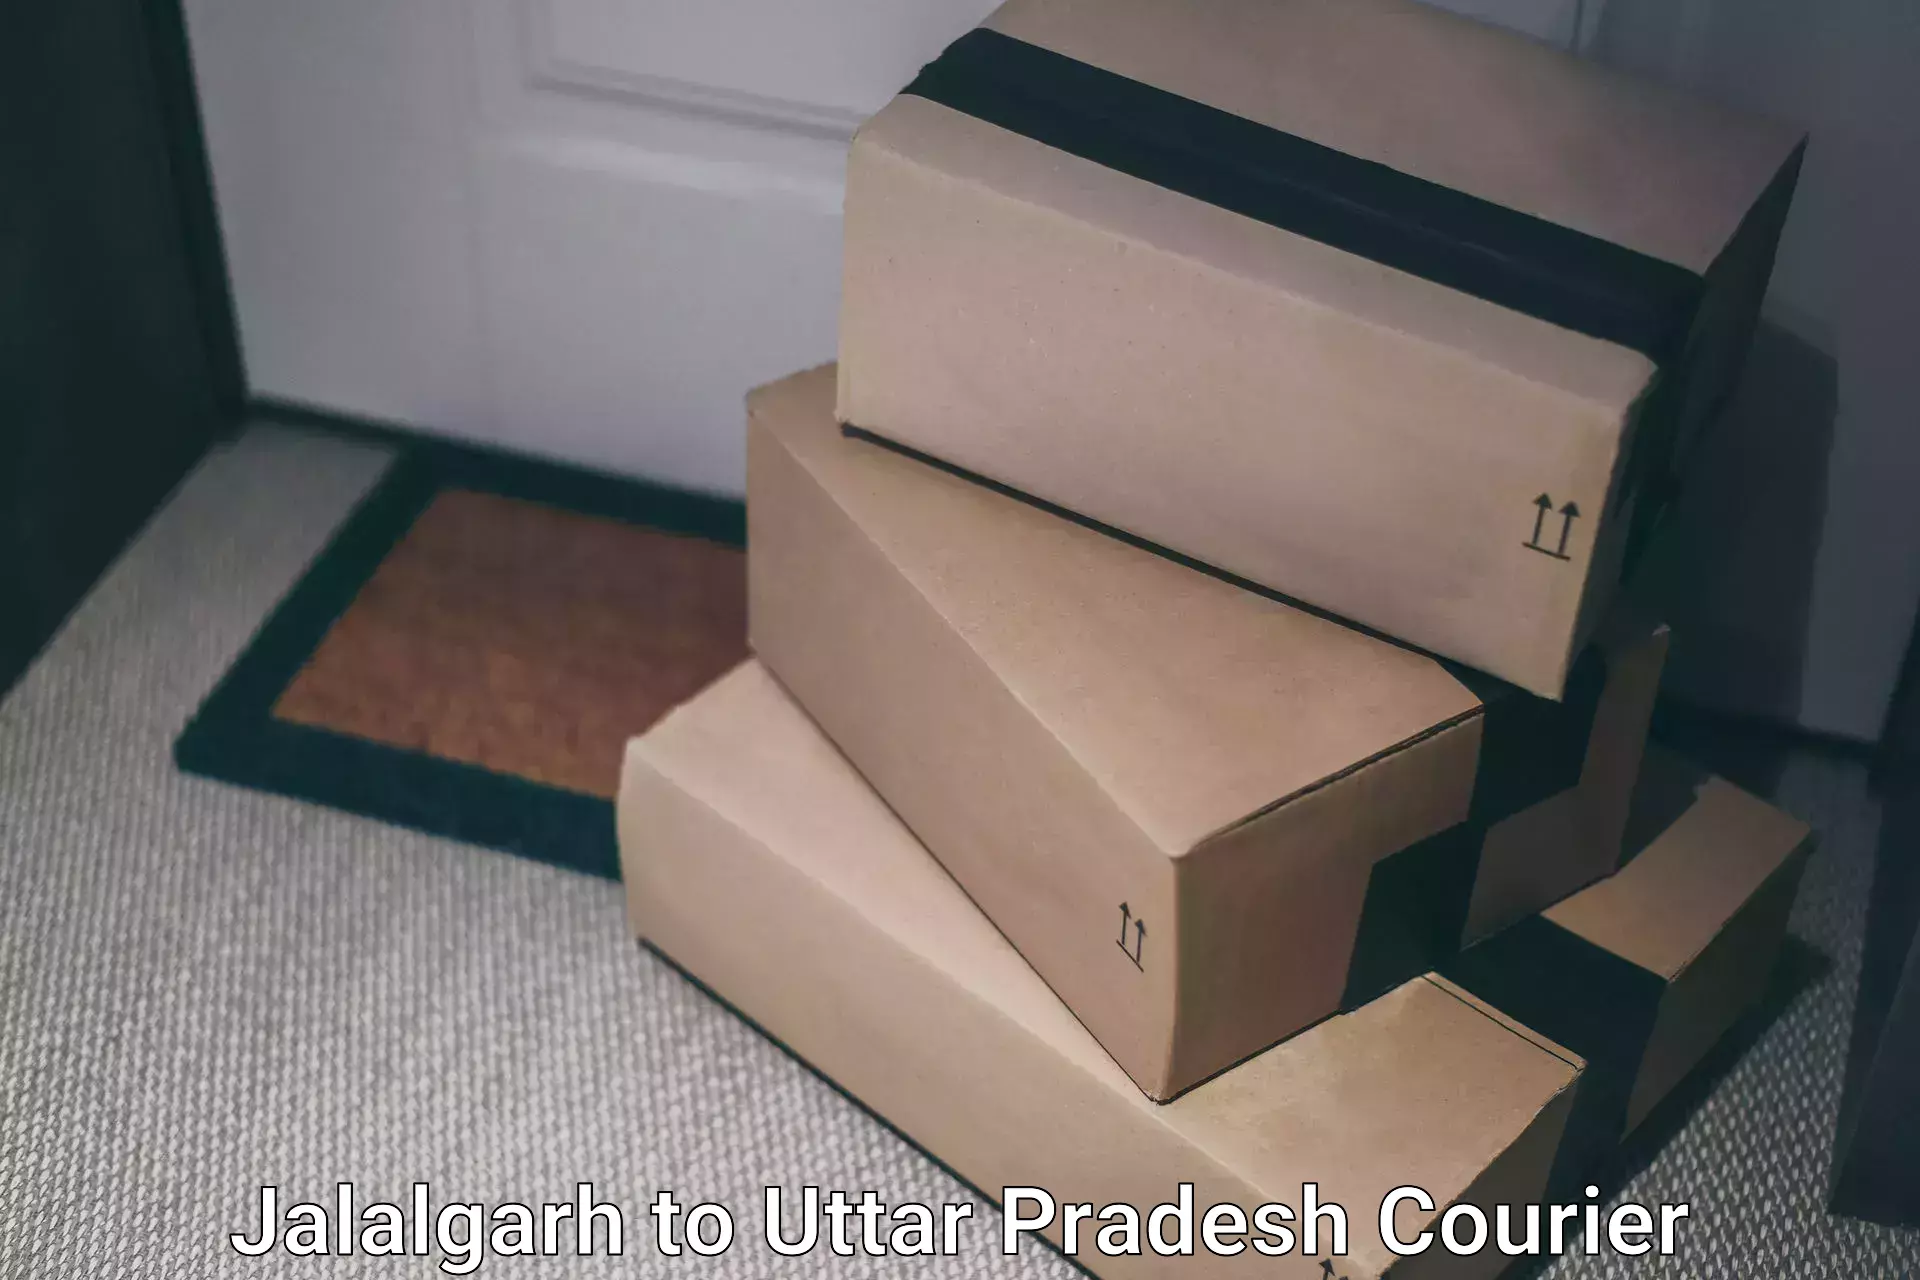 End-to-end delivery Jalalgarh to Sahatwar